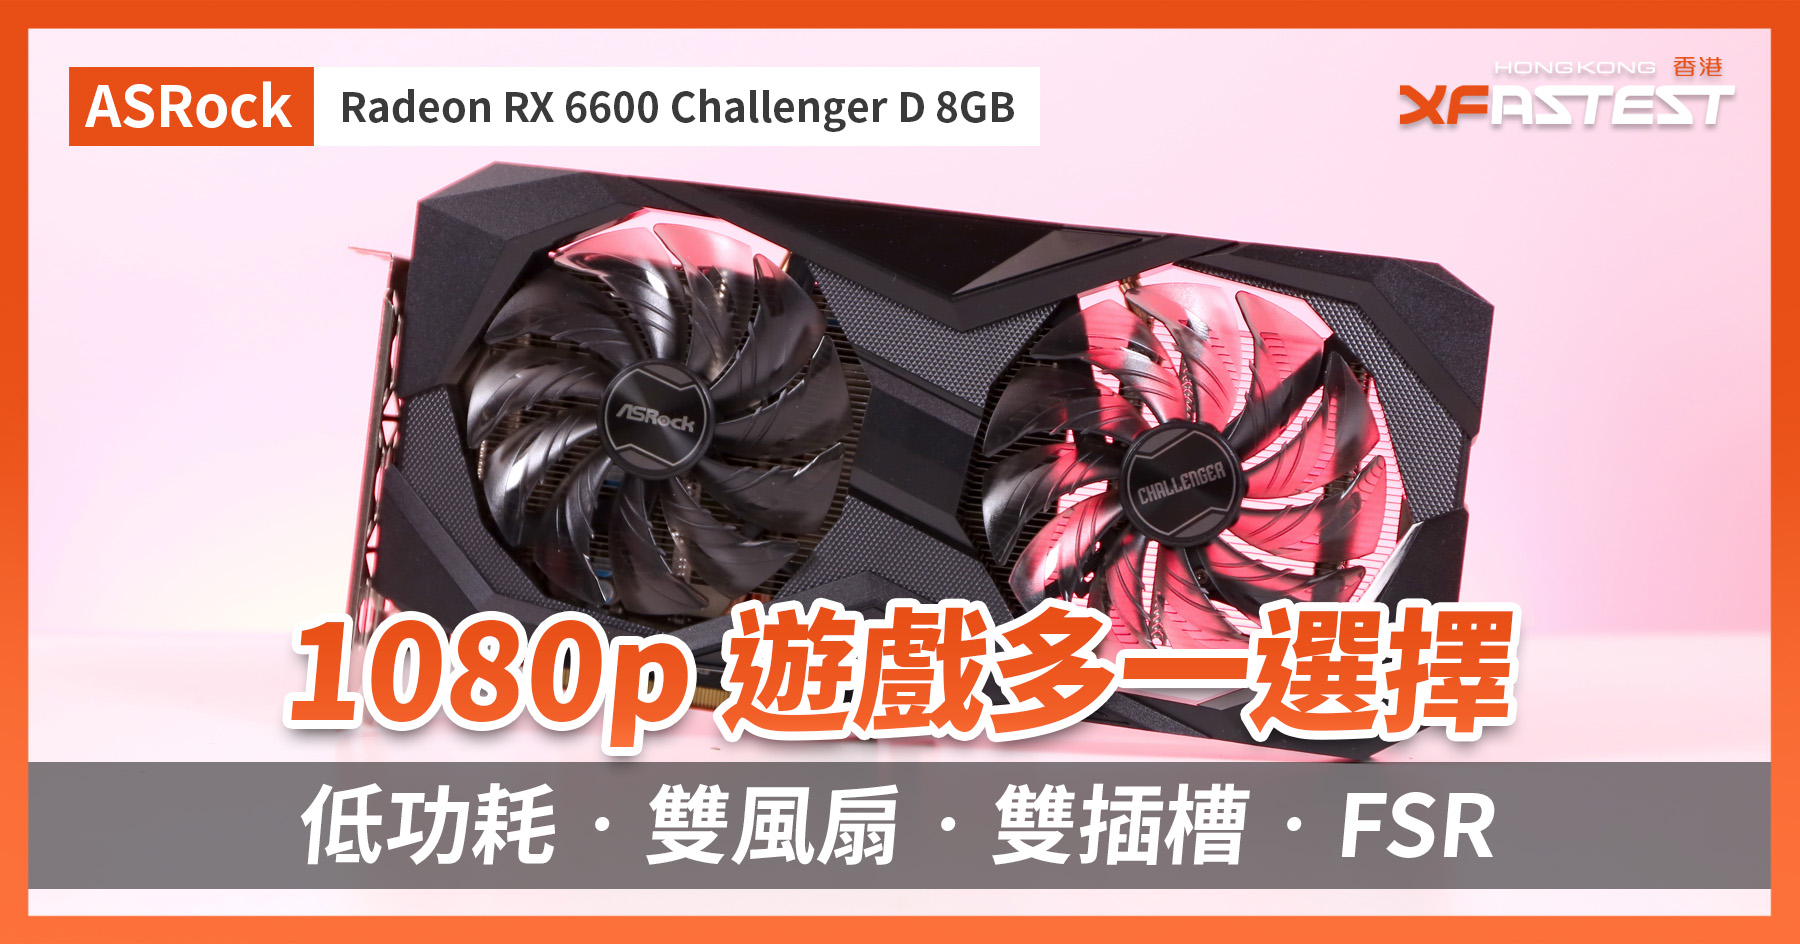 XF 開箱] 1080p 遊戲多一選擇低功耗‧雙風扇‧雙插槽‧FSR ASRock Radeon RX 6600 Challenger D 8GB -  XFastest Hong Kong